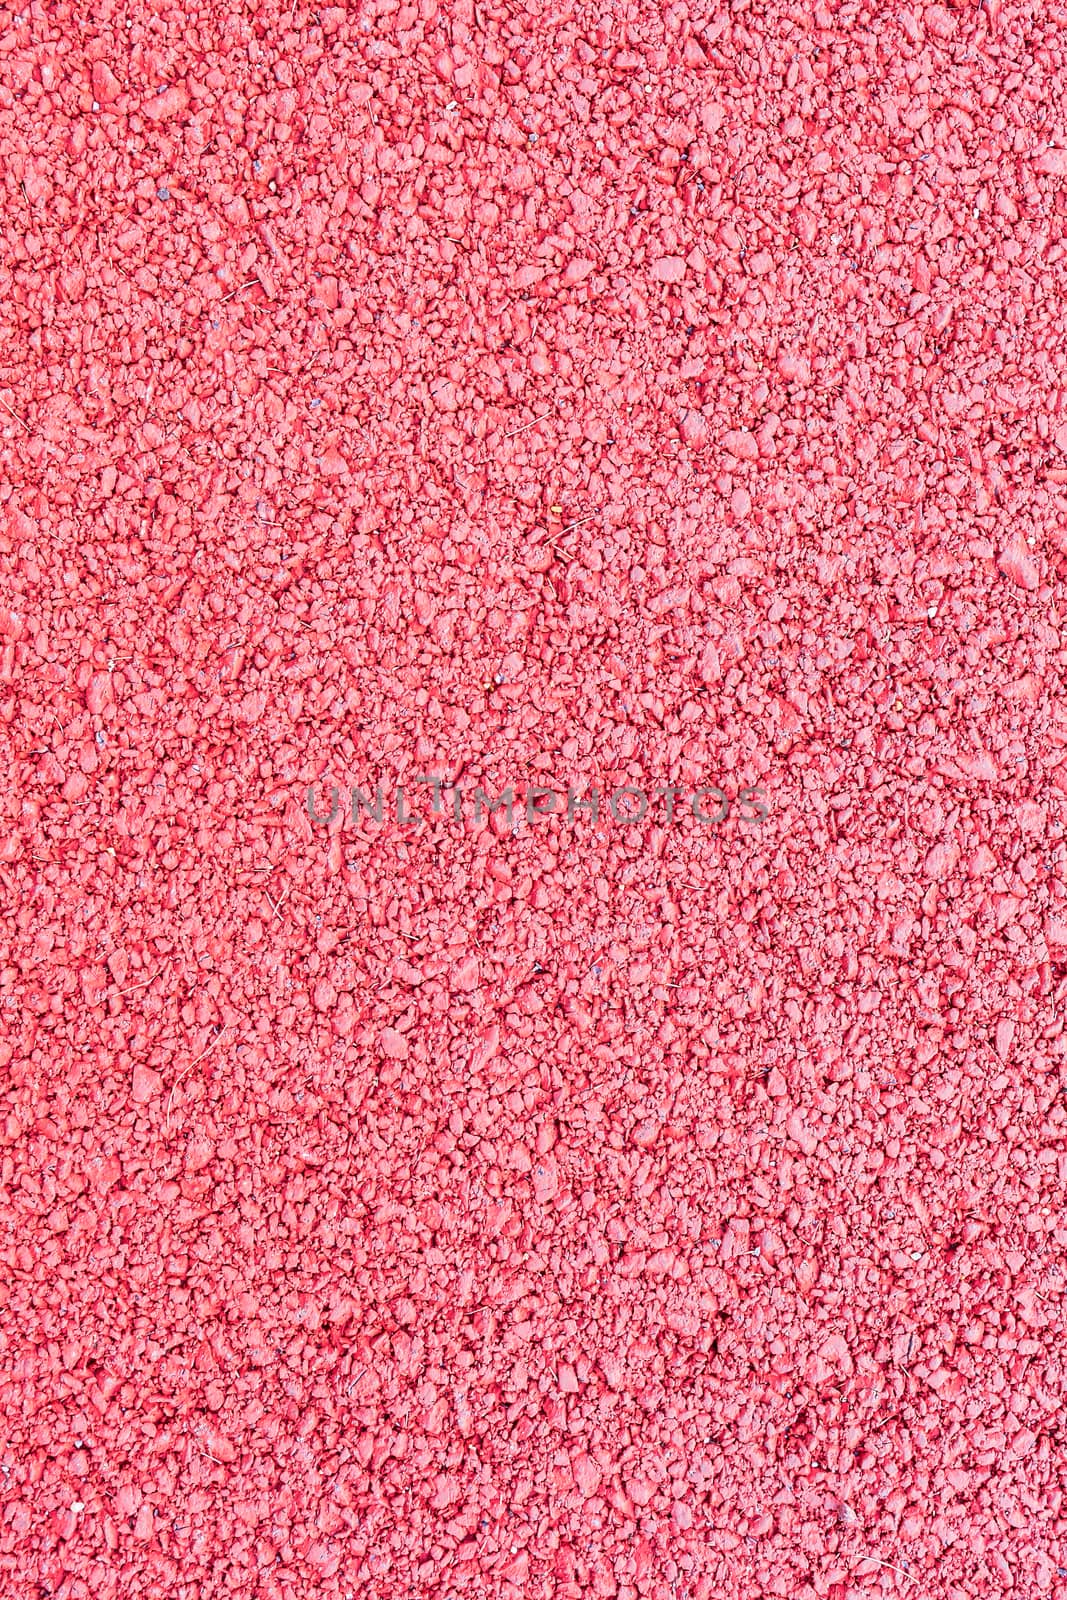 background texture of rough red asphalt by FrameAngel